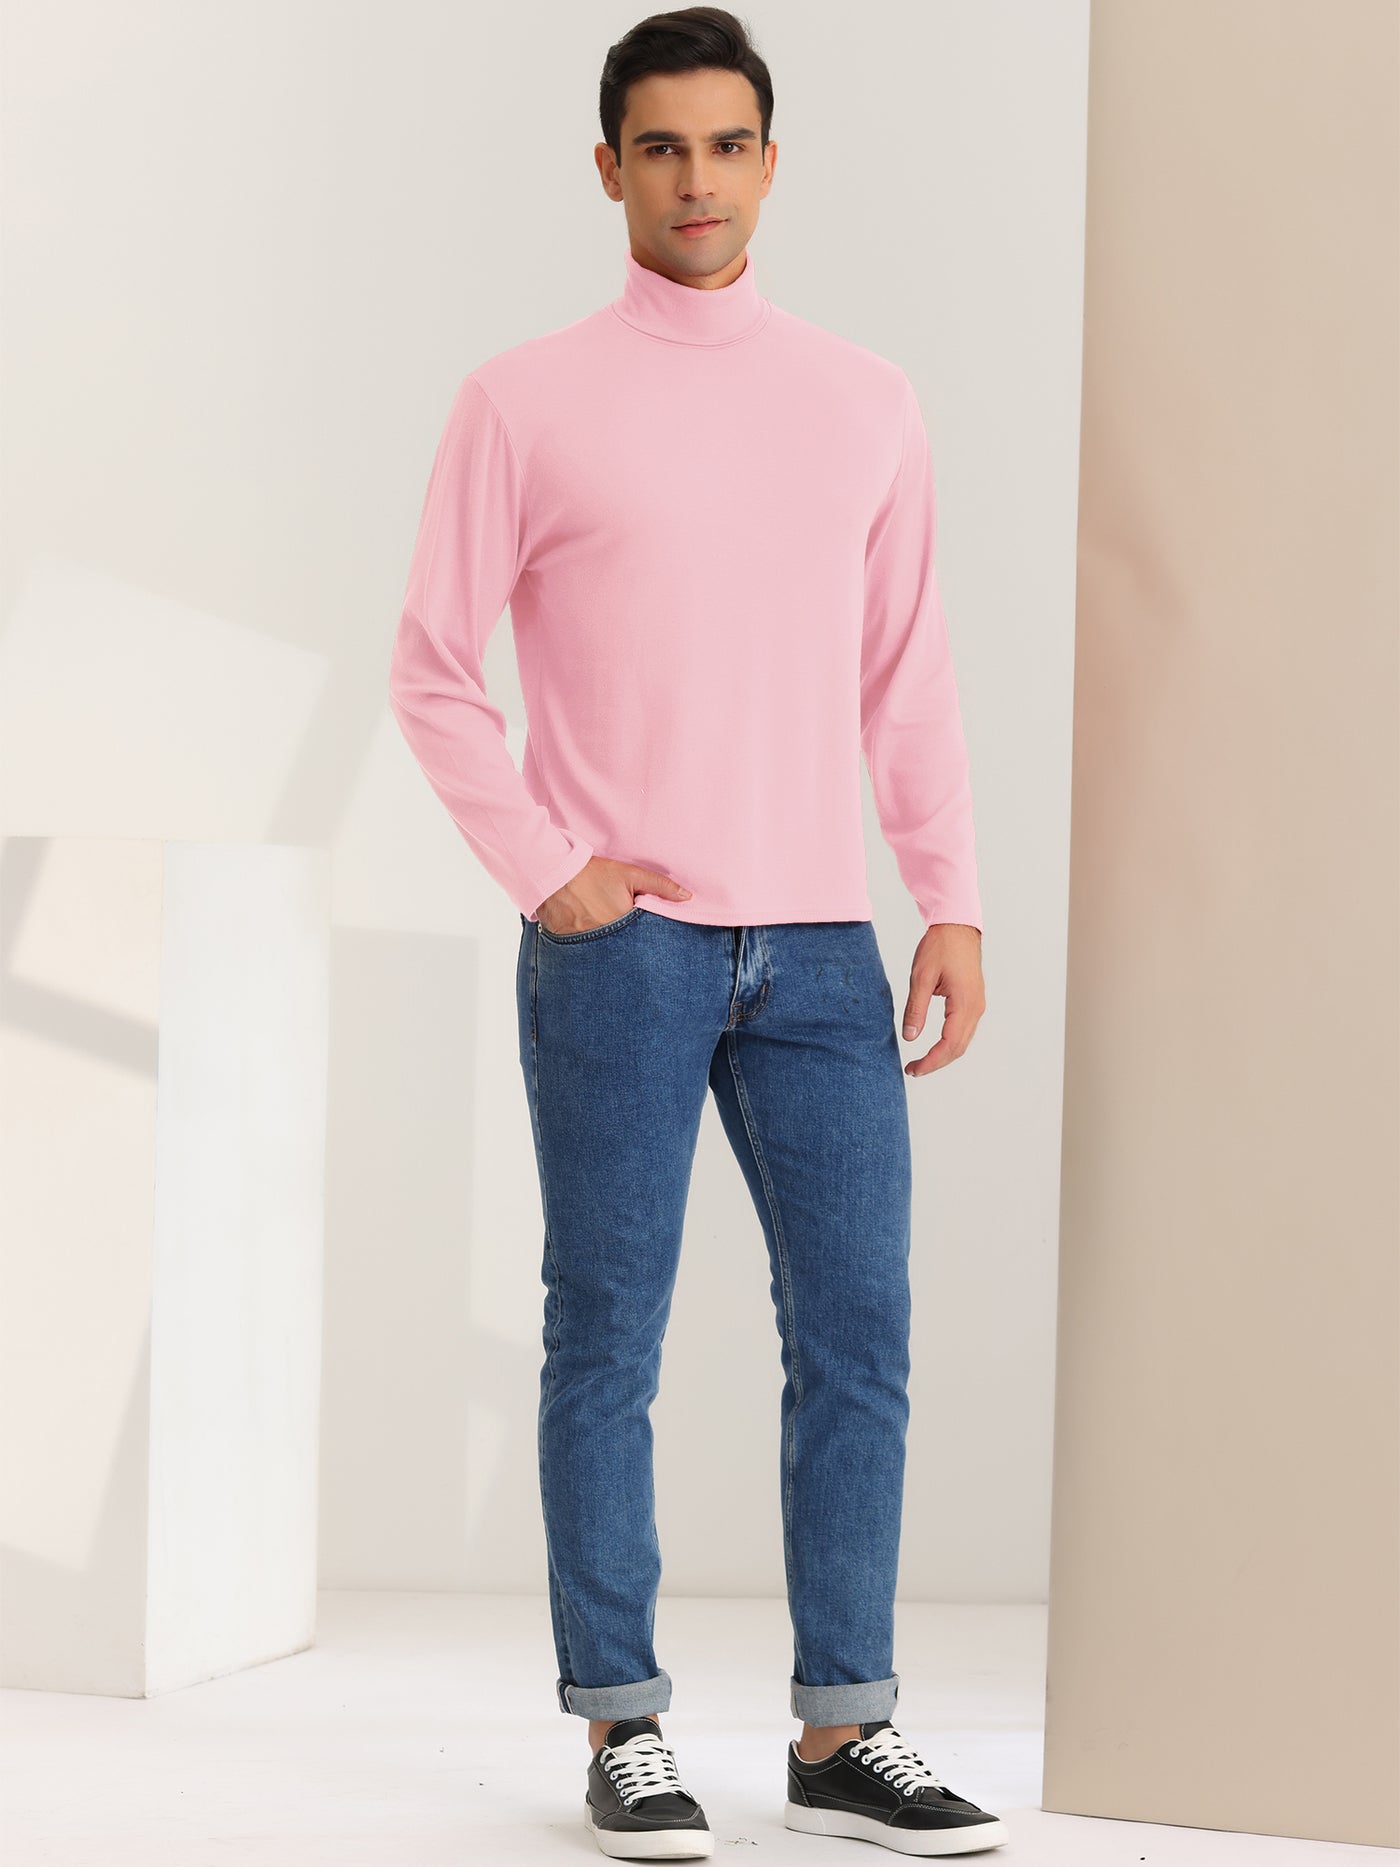 Bublédon Men's Turtleneck Shirt Slim Fit Long Sleeves Solid Color Pullover T-Shirt Top